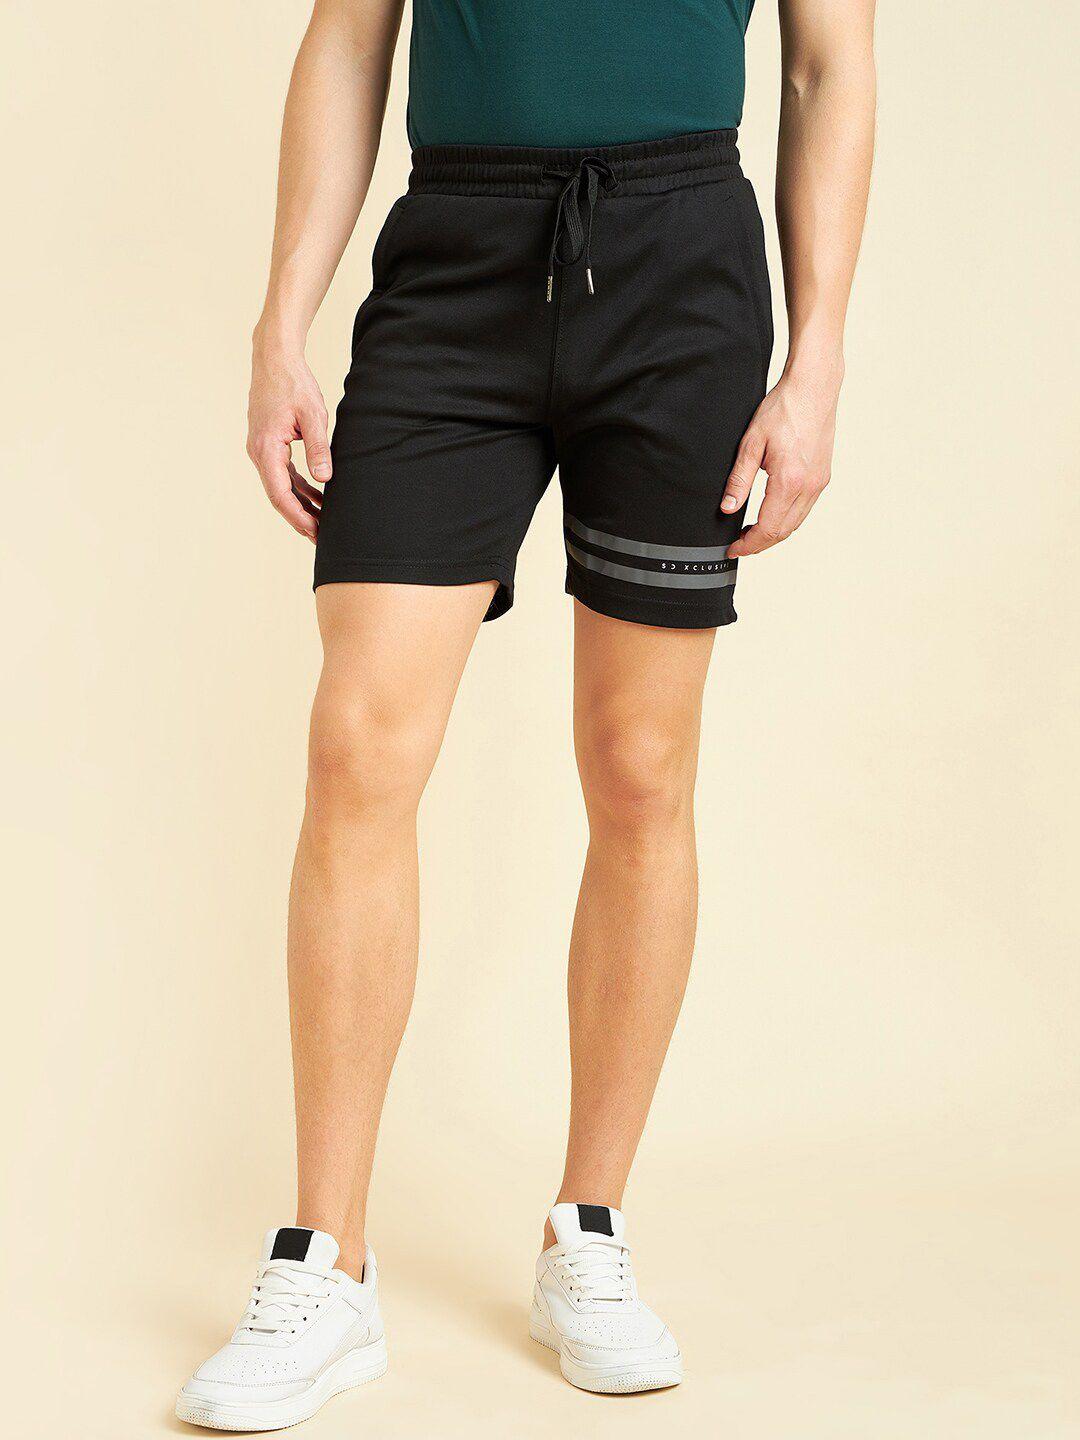 sweet-dreams-men-black-mid-rise-shorts